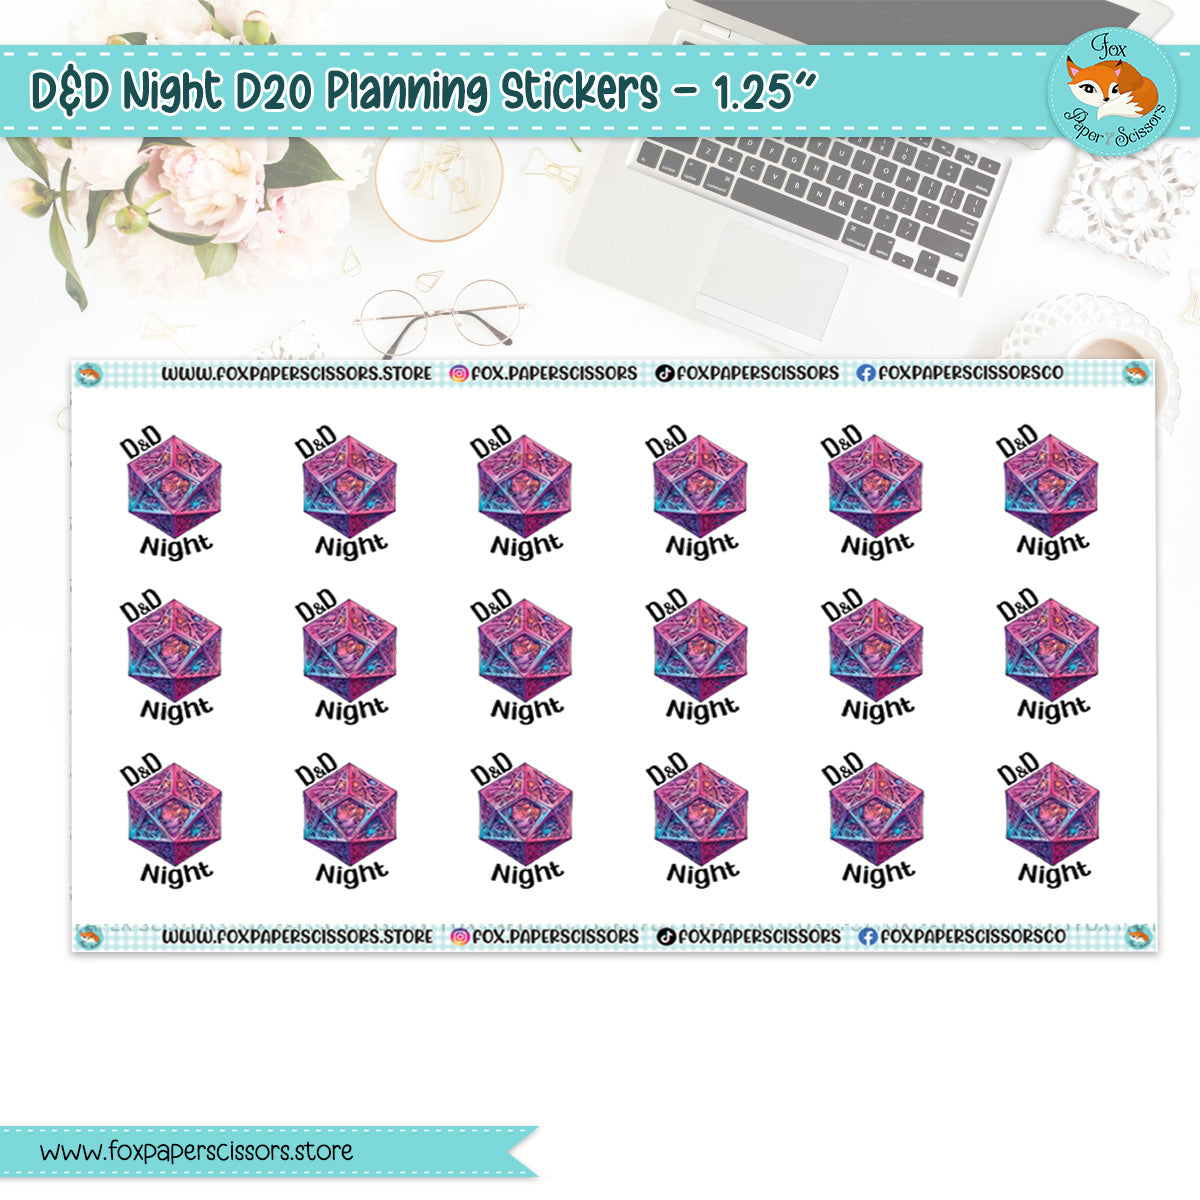 D20 D&D Planning Stickers - 1.25"